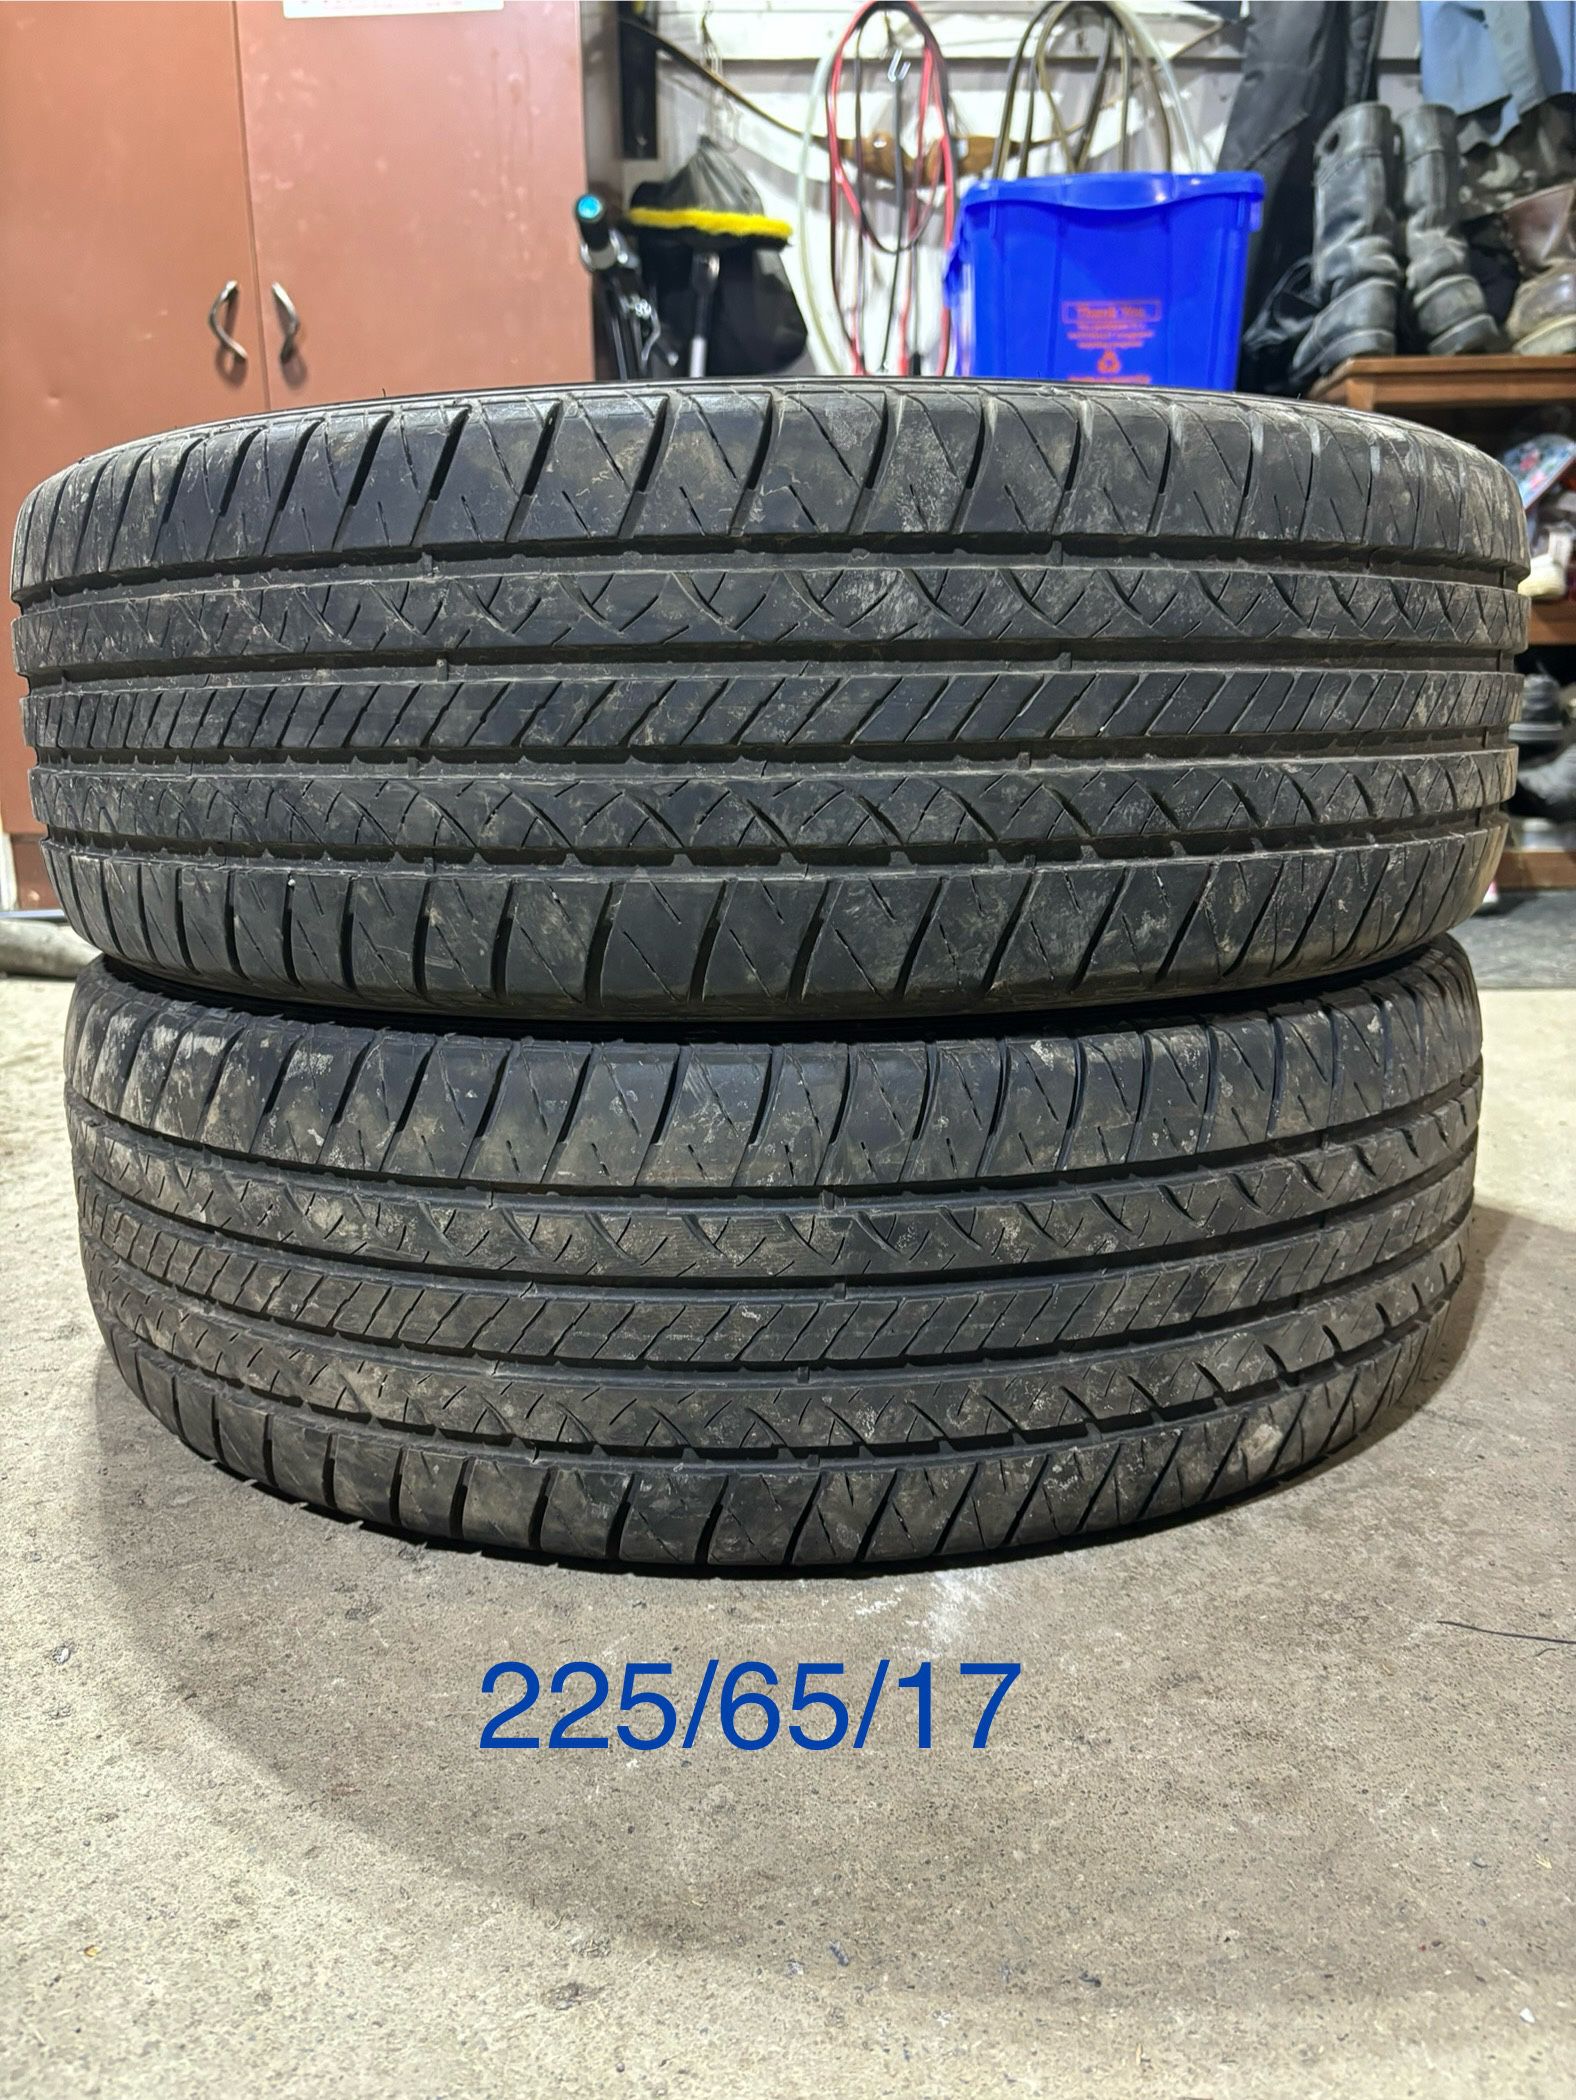 (2) - 225/65/17 Douglas Touring A/S Tires